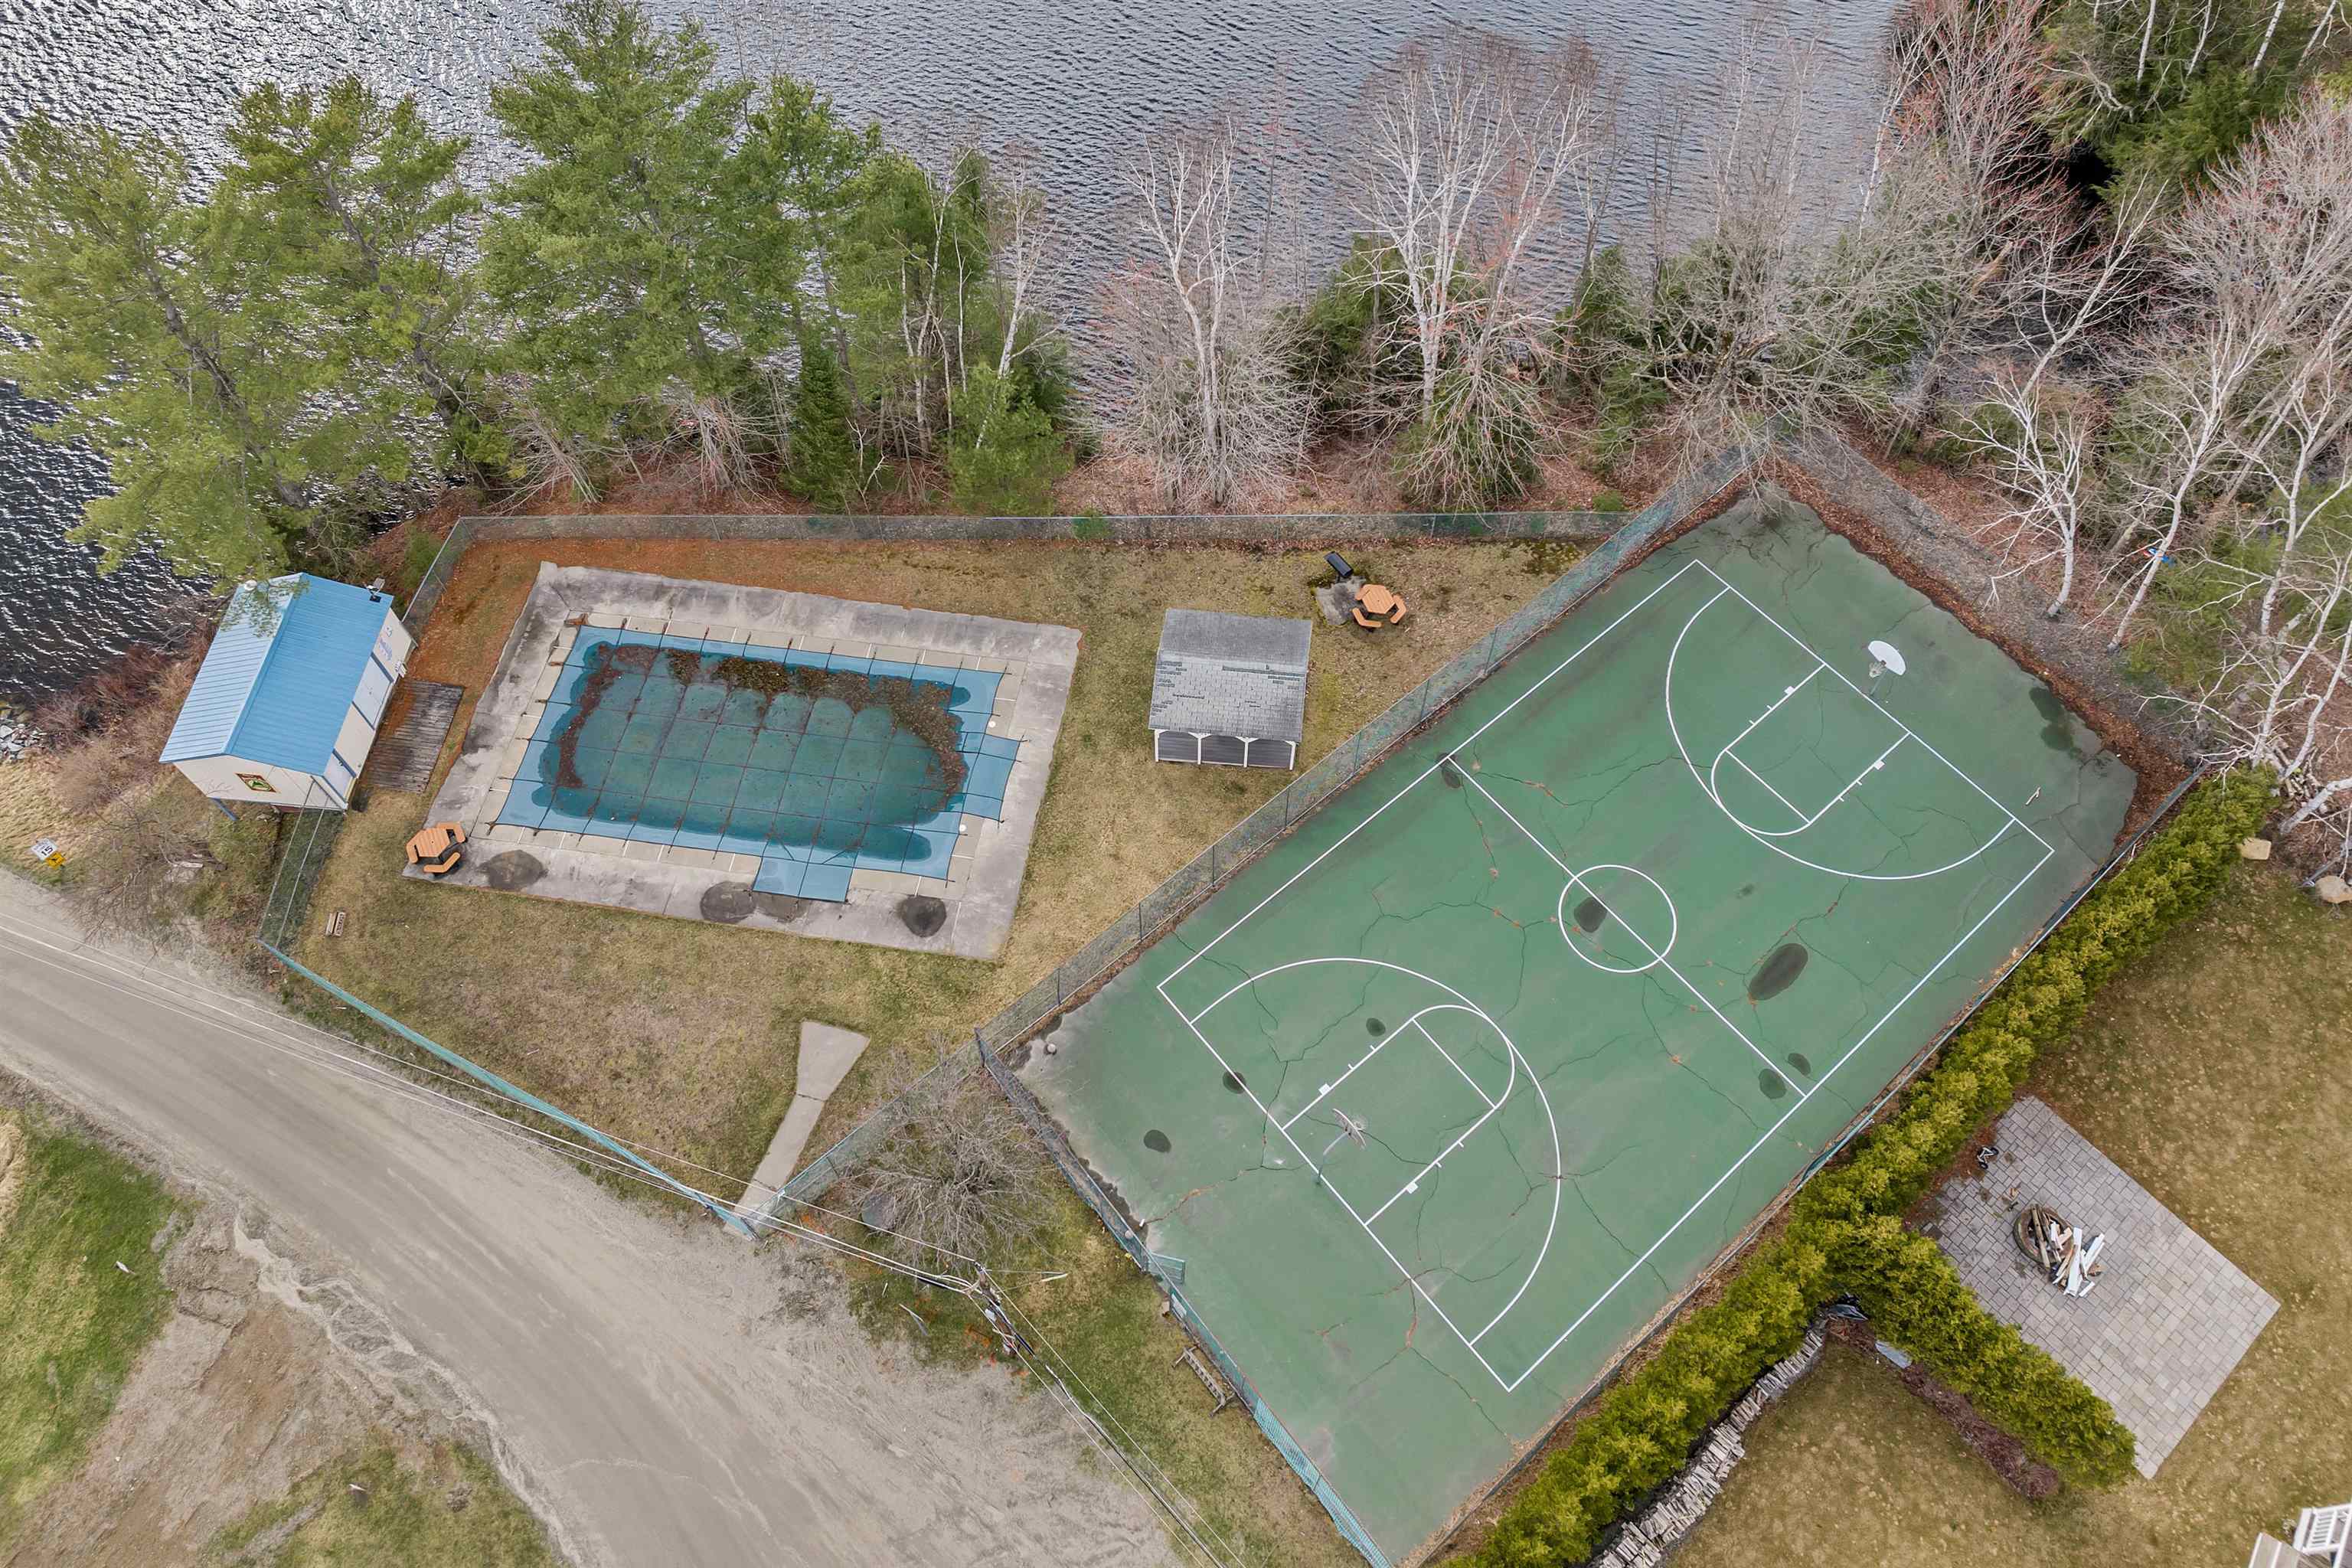 Inground pool and basketball courts